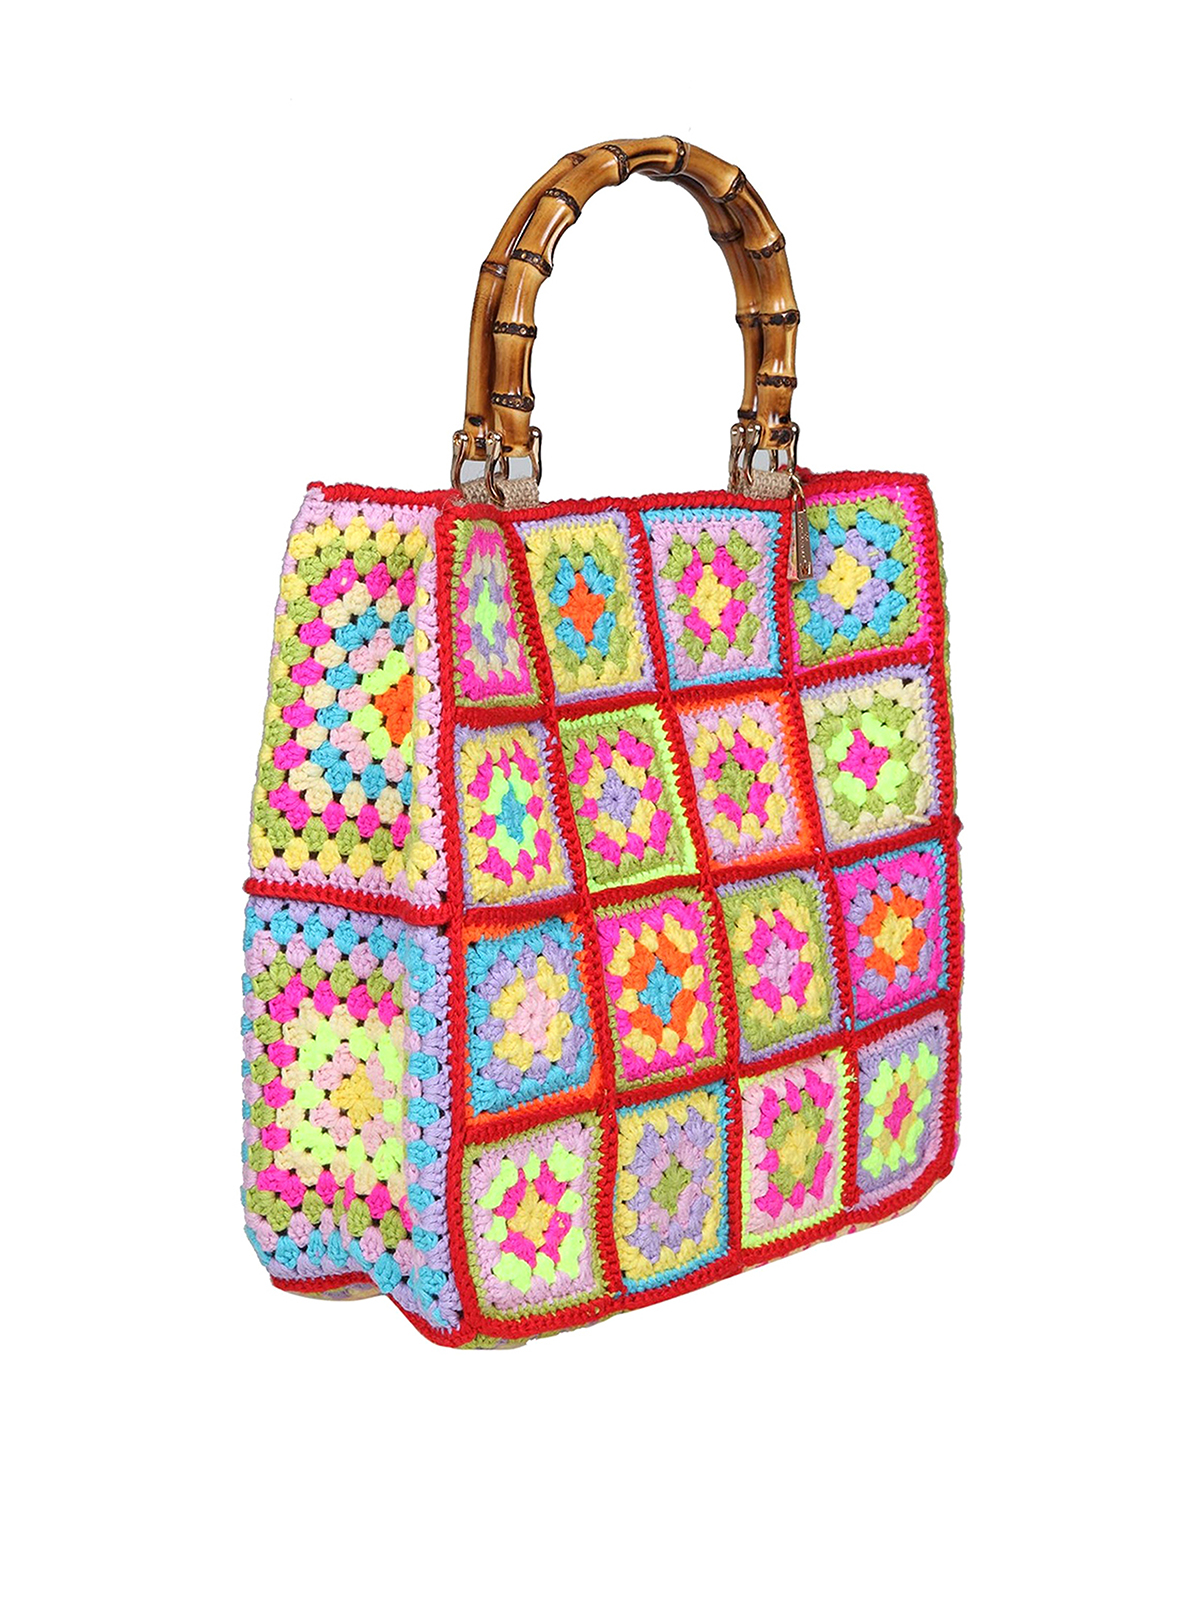 Project Bags Bundle – Shelley Husband Crochet